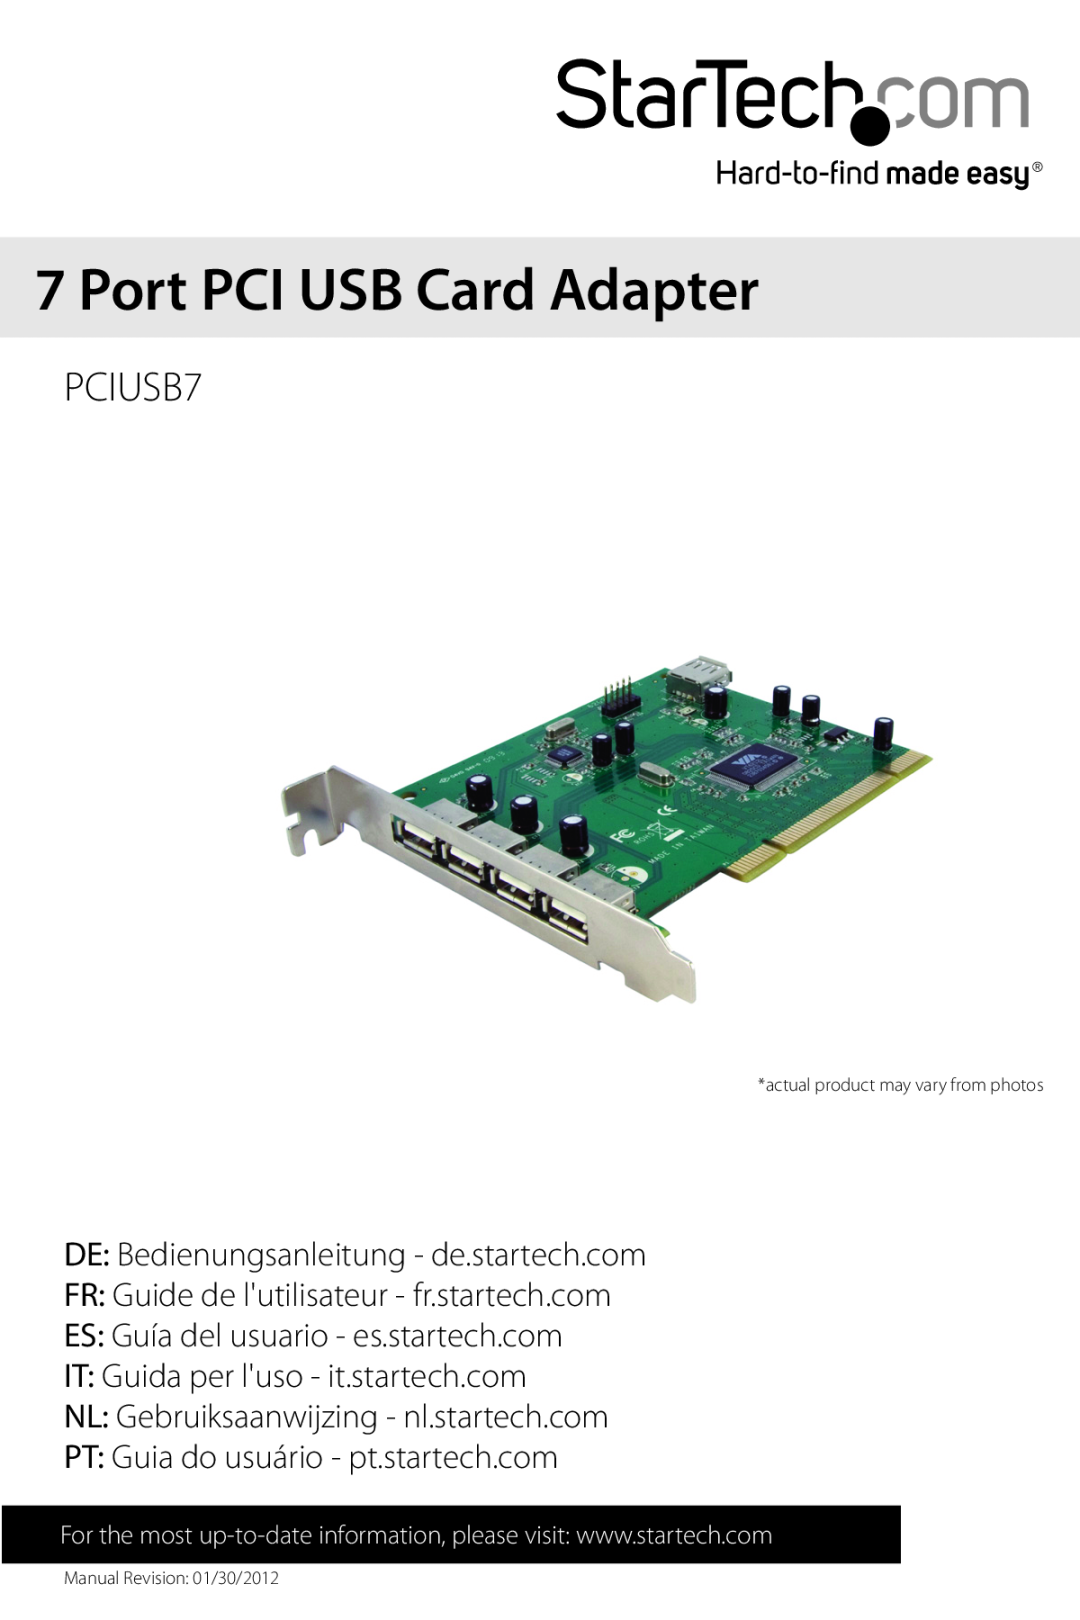 StarTech.com pciusb7 manual Port PCI USB Card Adapter, PCIUSB7, DE Bedienungsanleitung - de.startech.com 